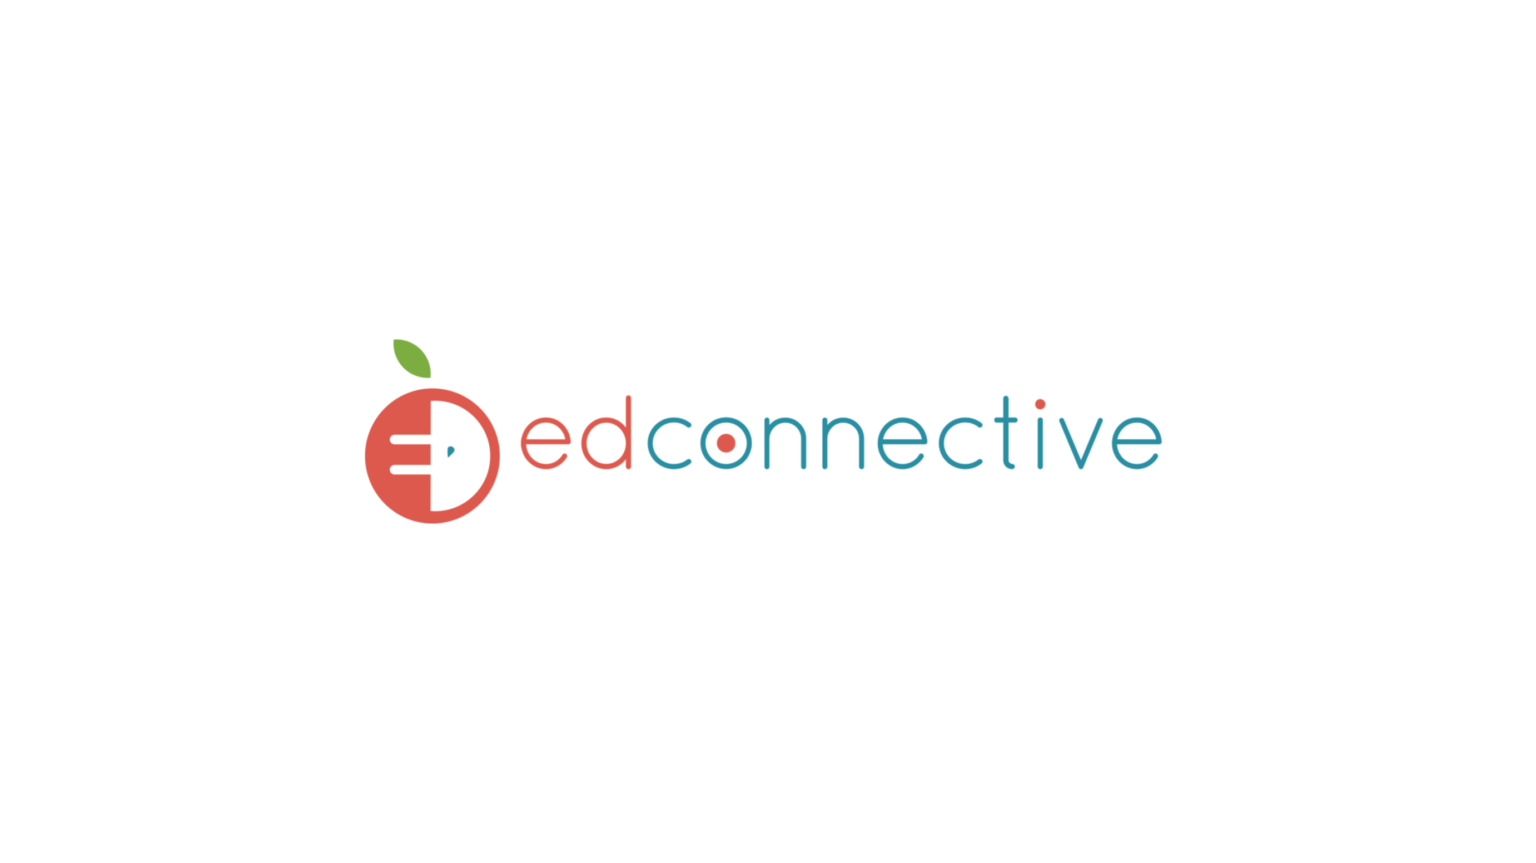 EdTech startup EdConnective